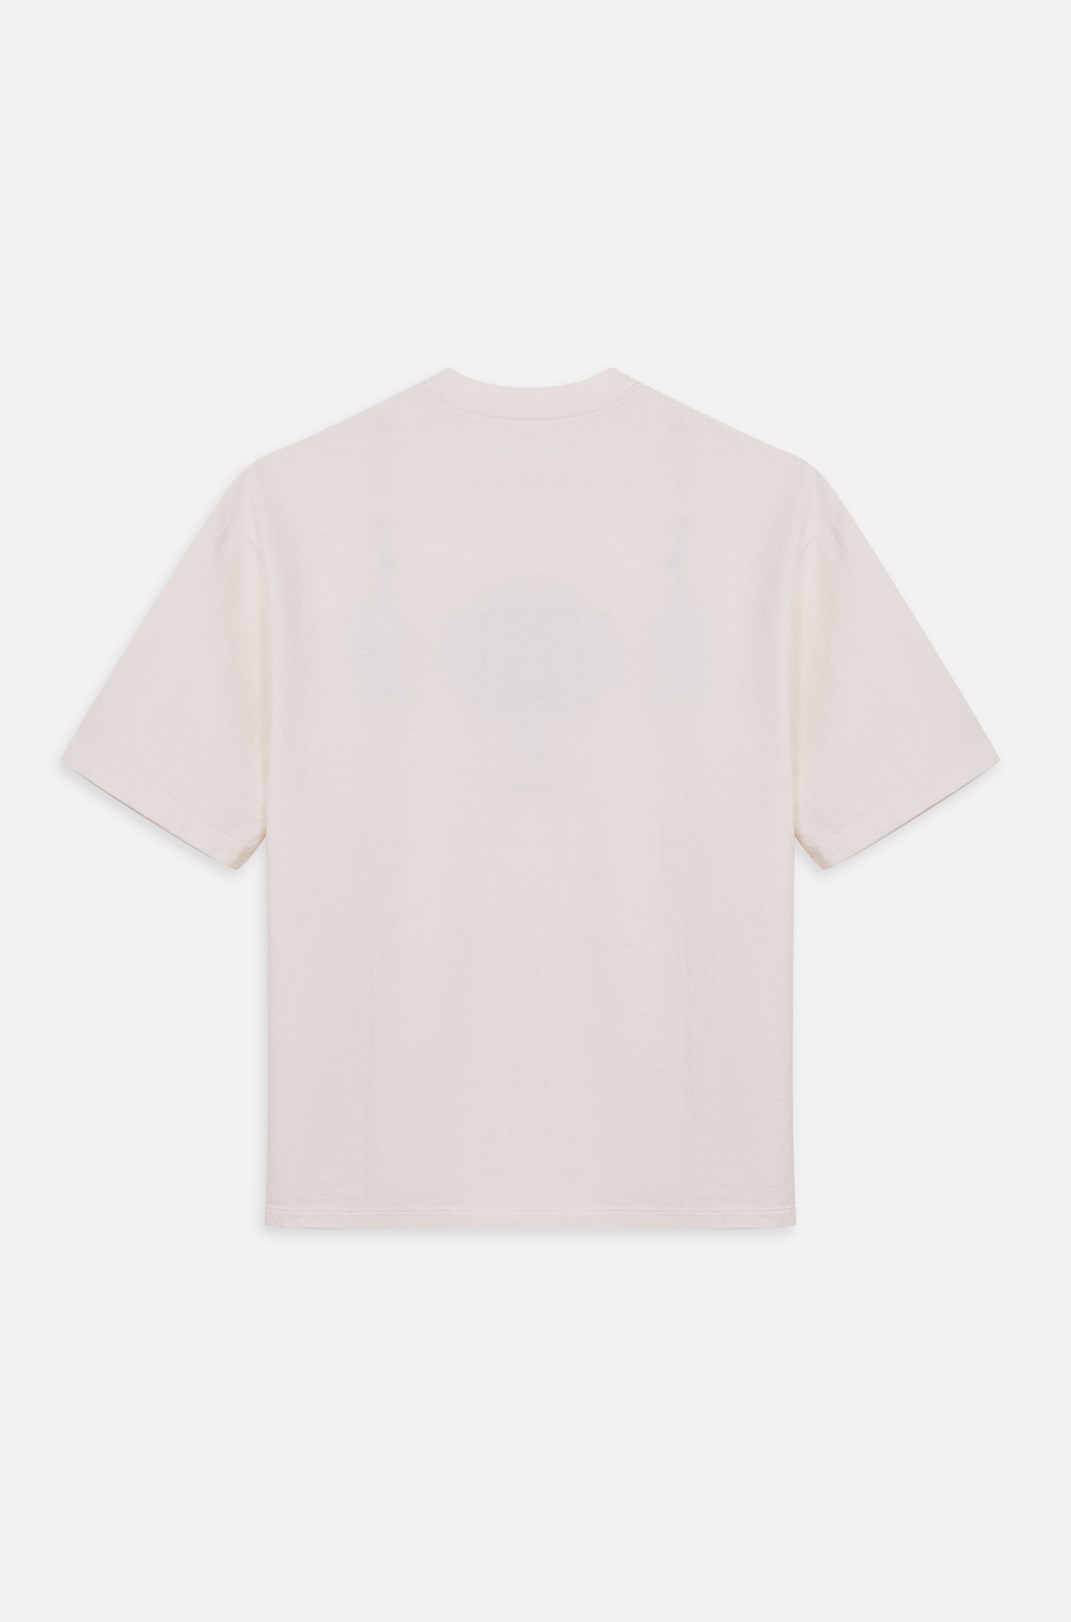 Camiseta Oversized Approve Ap Off White e Preta